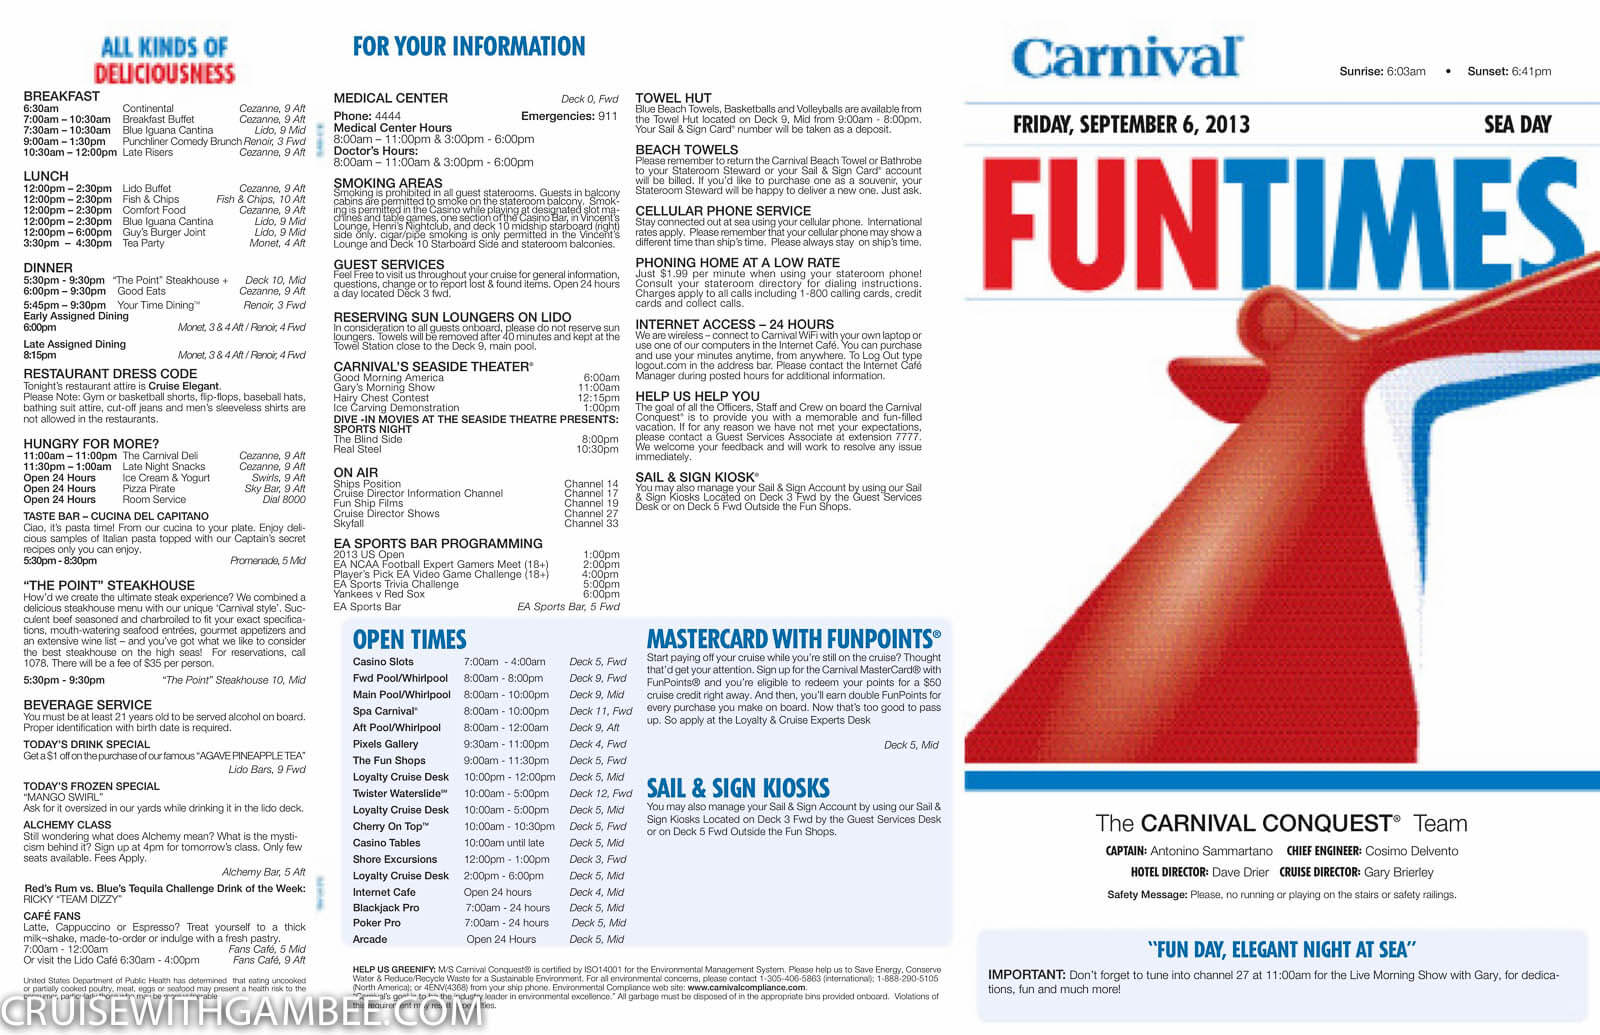 Carnival Conquest Funtimes-11